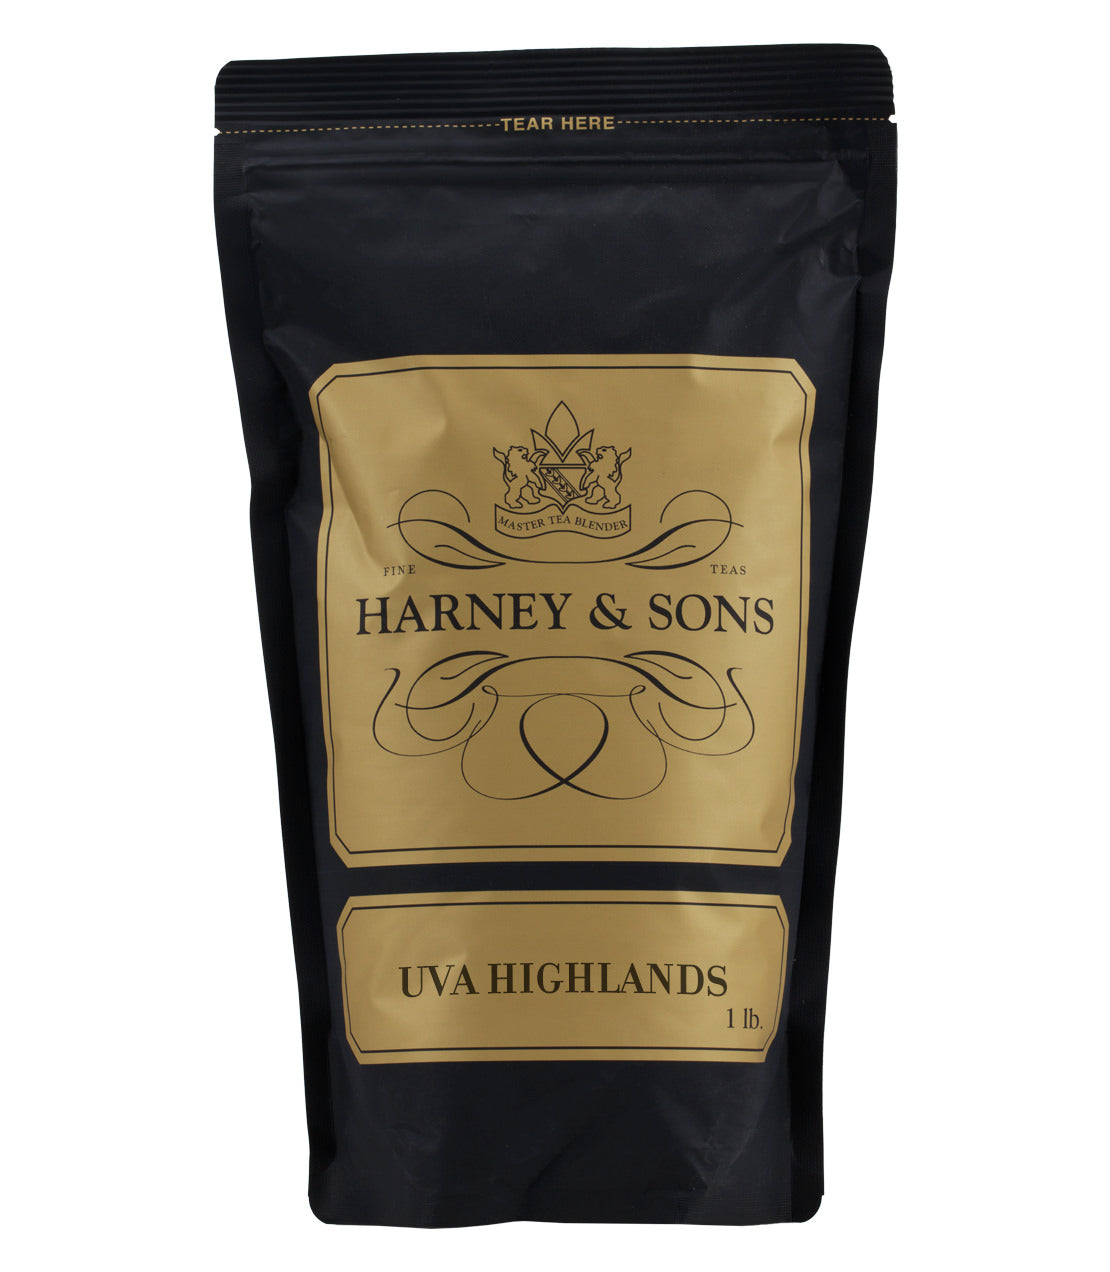 Uva Highlands - Loose 1 lb. Bag - Harney & Sons Fine Teas